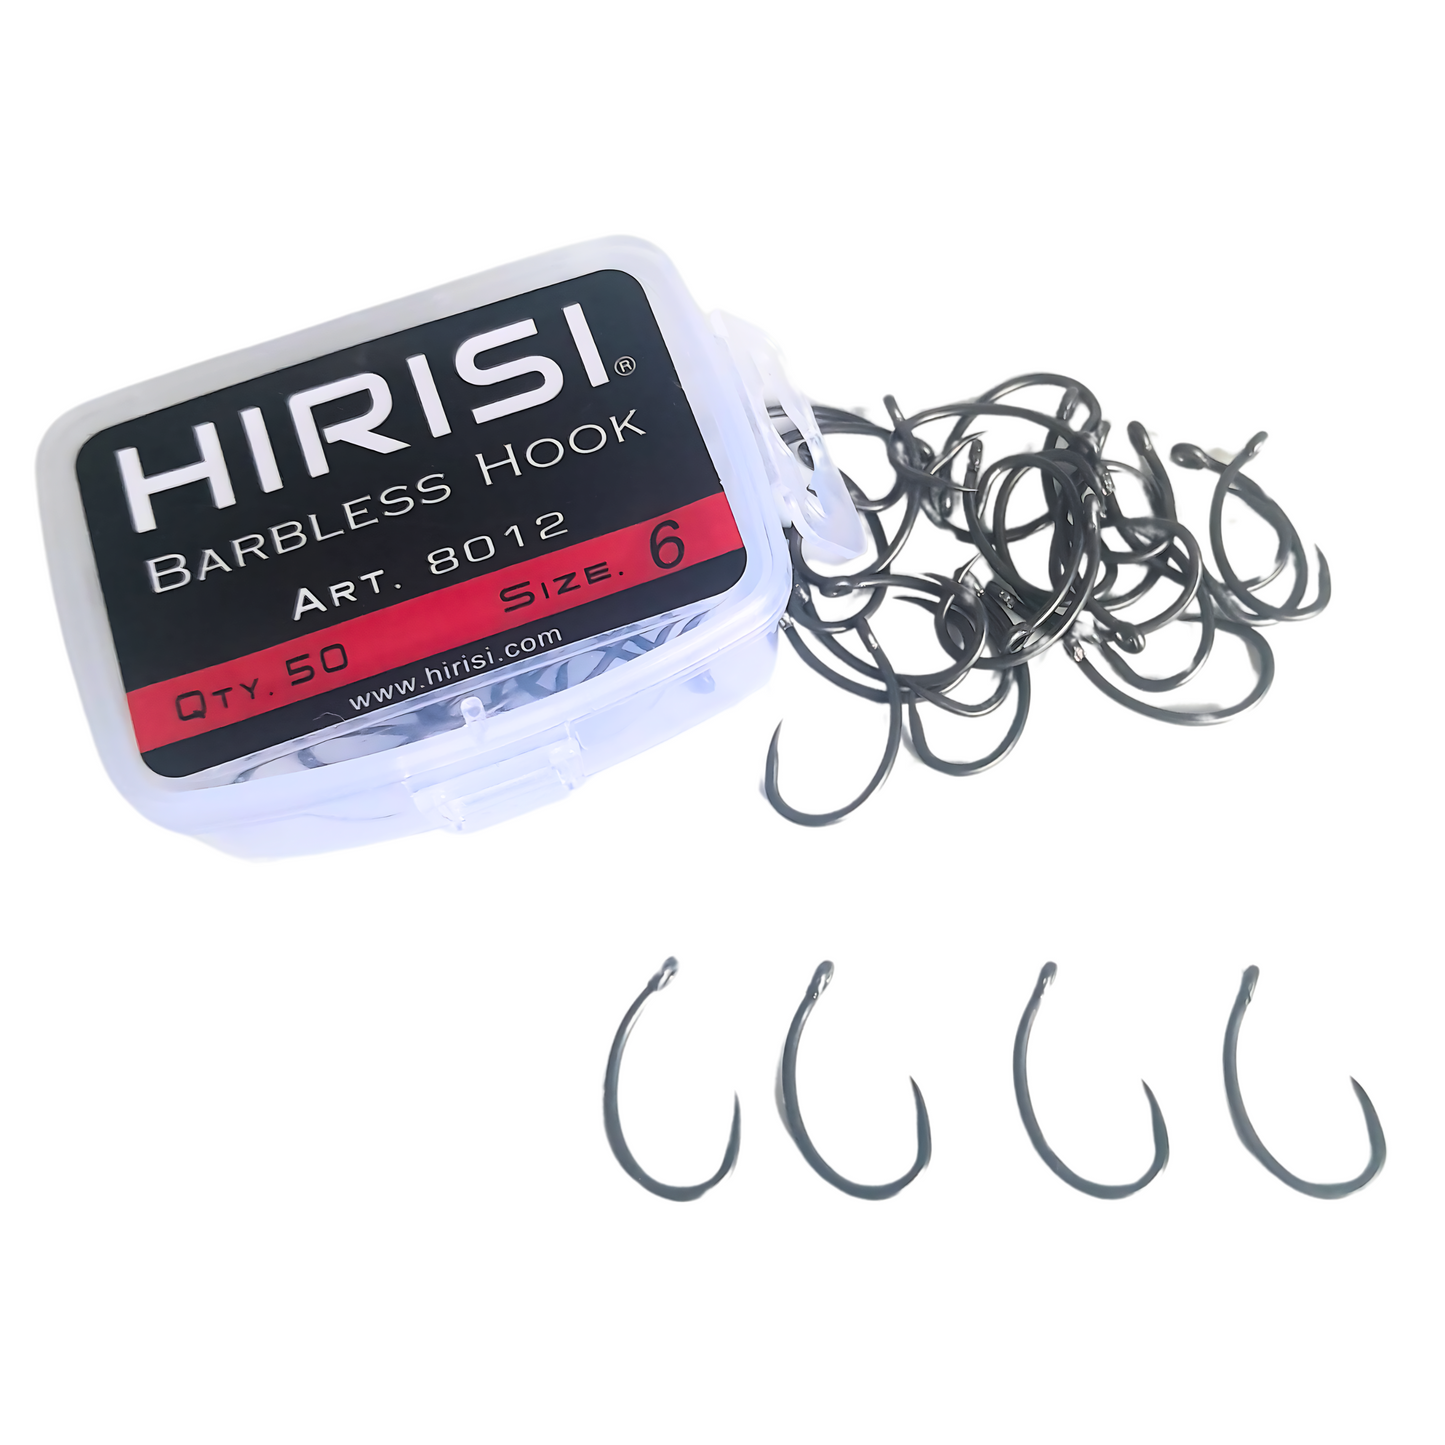 Hirisi Carbon Steel Hooks 8012 | 50 Pieces | No. 6